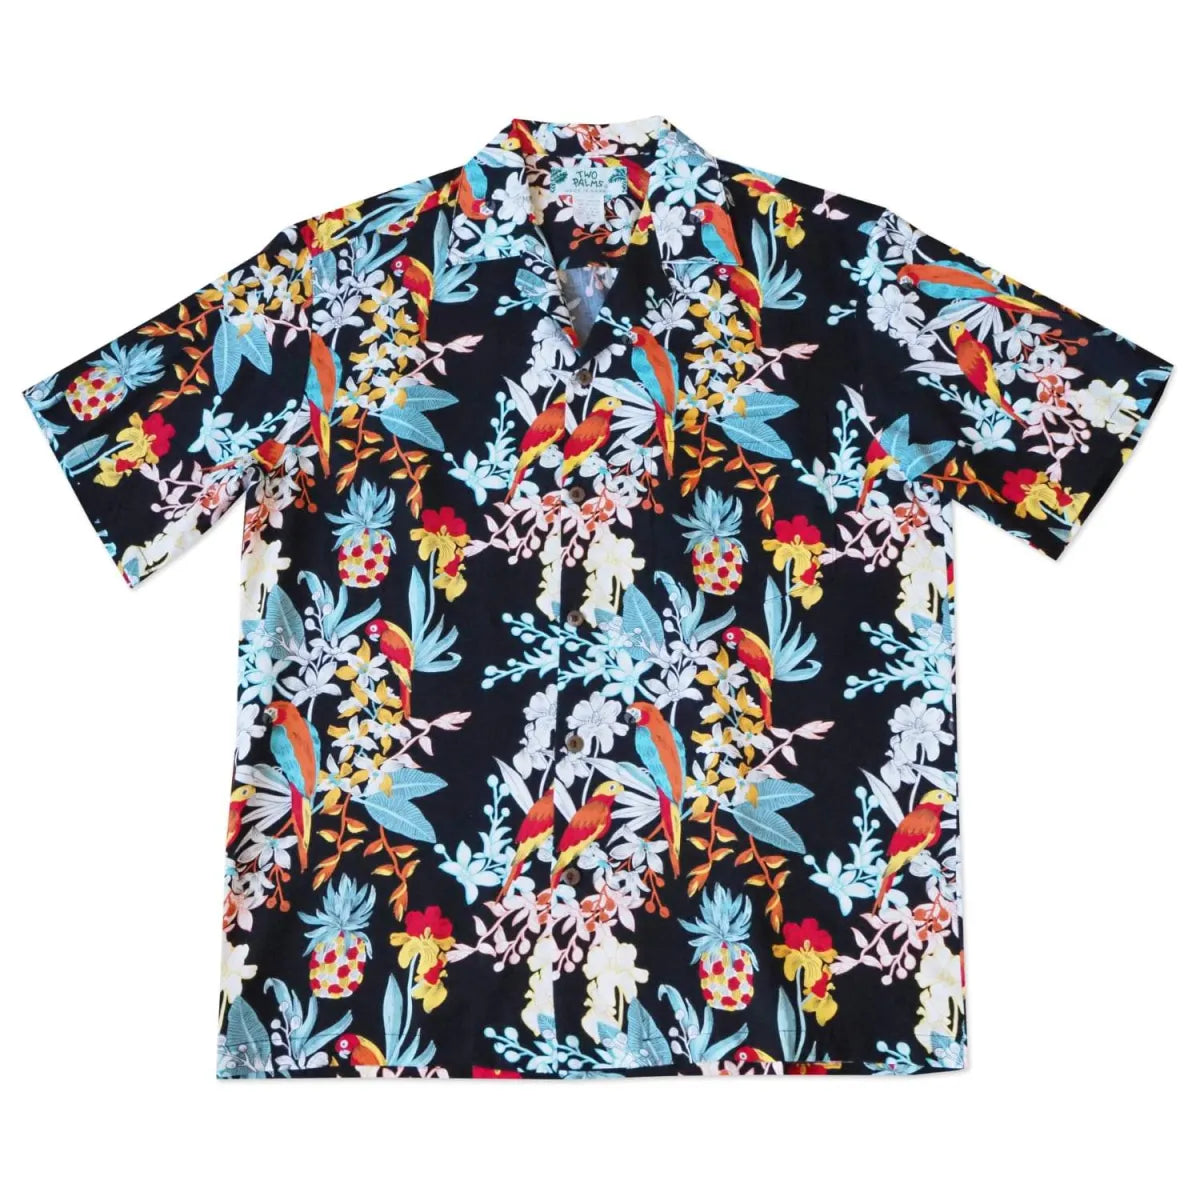 Wild parrots black hawaiian rayon shirt